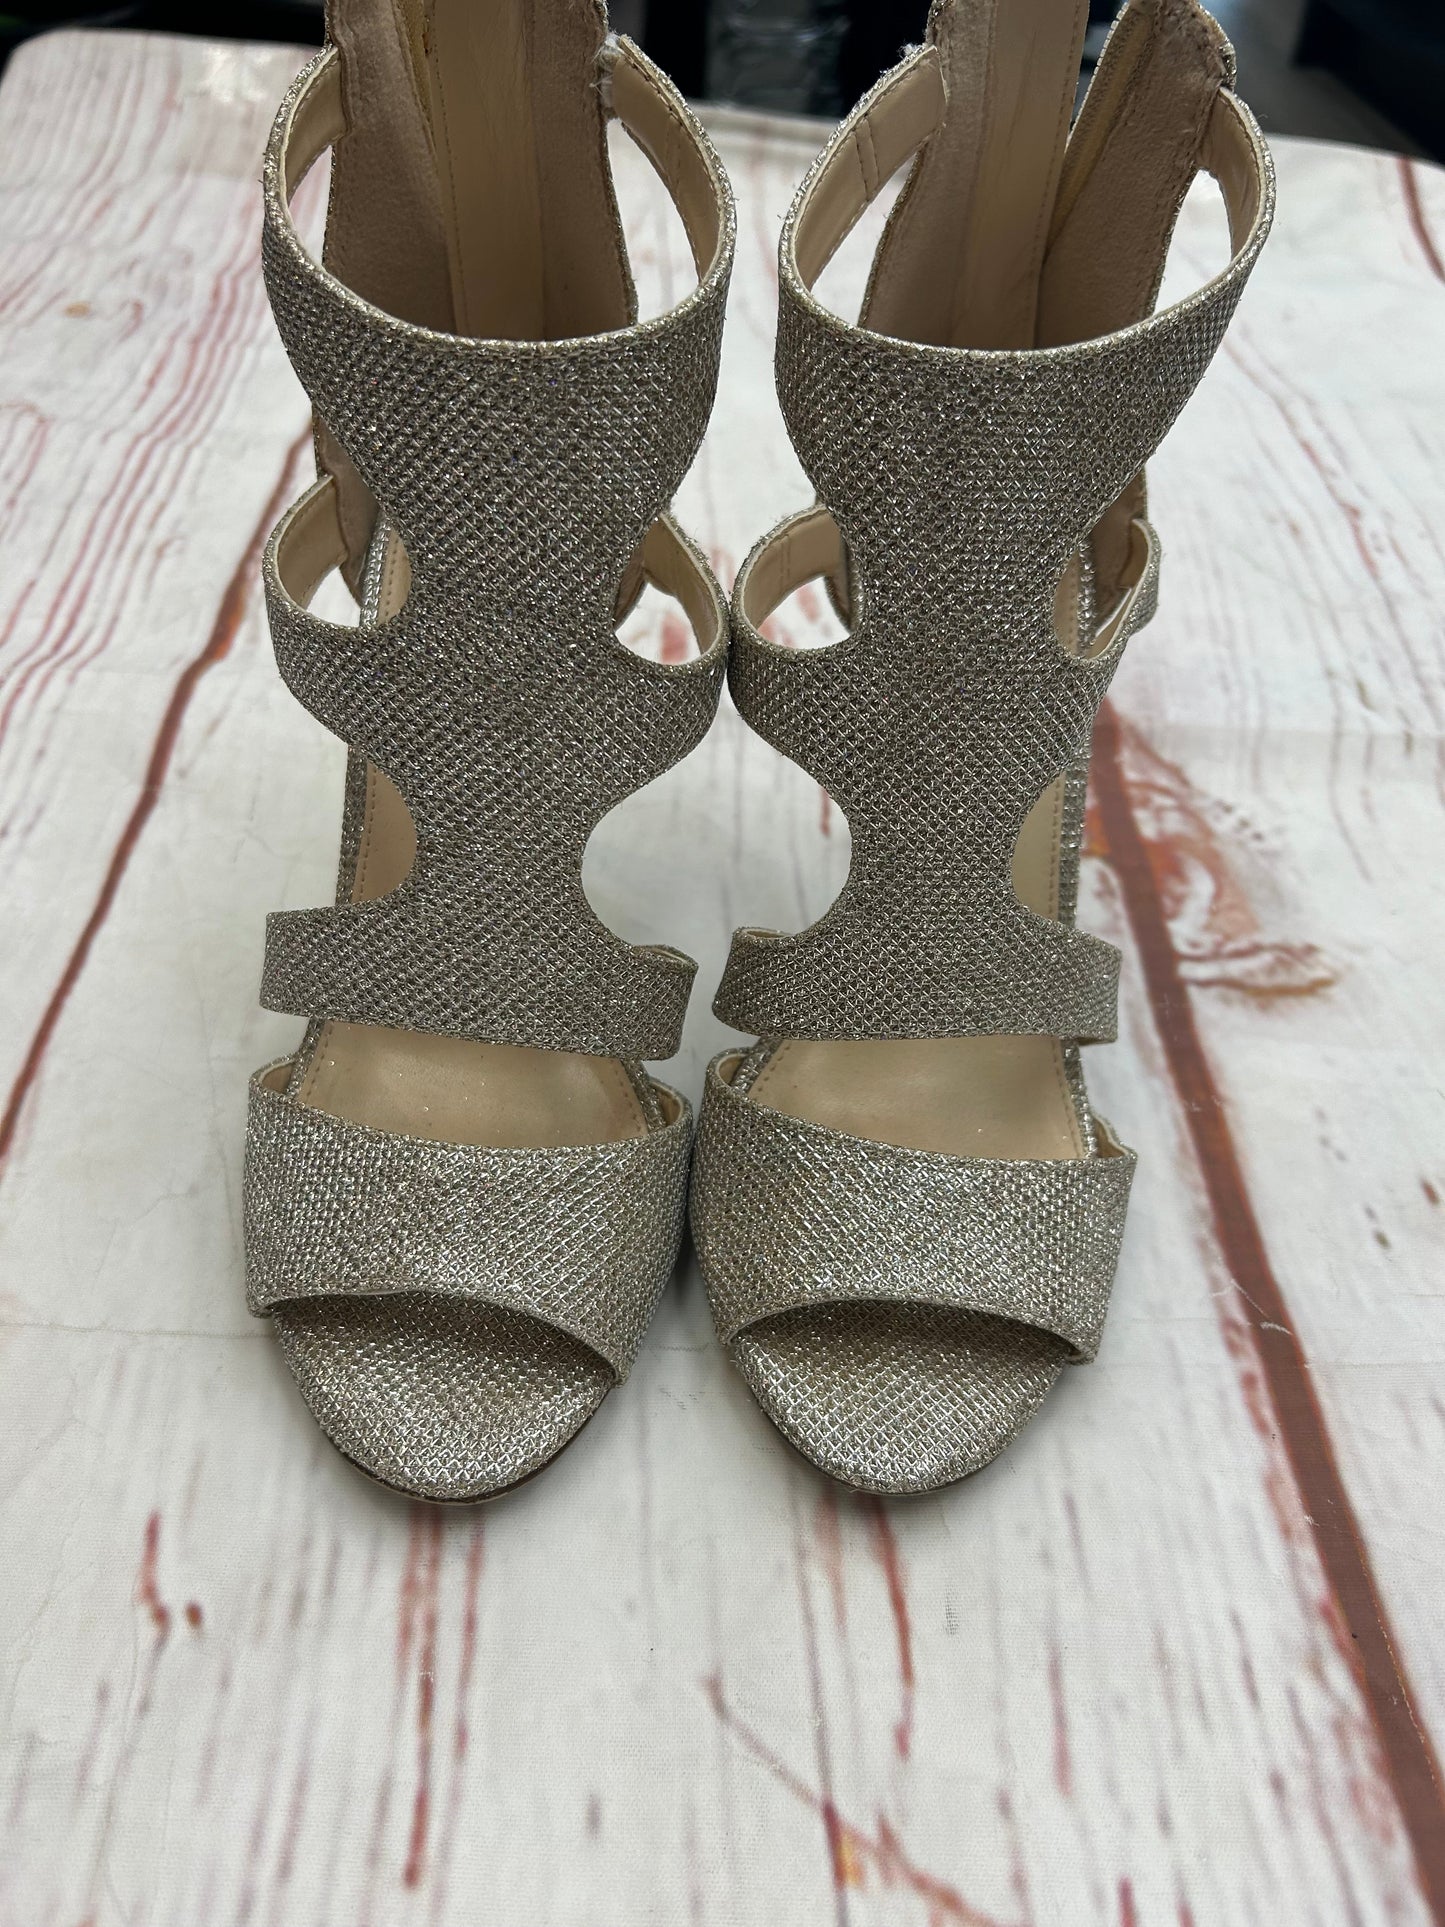 Shoes Heels Stiletto By Maripe  Size: 6.5